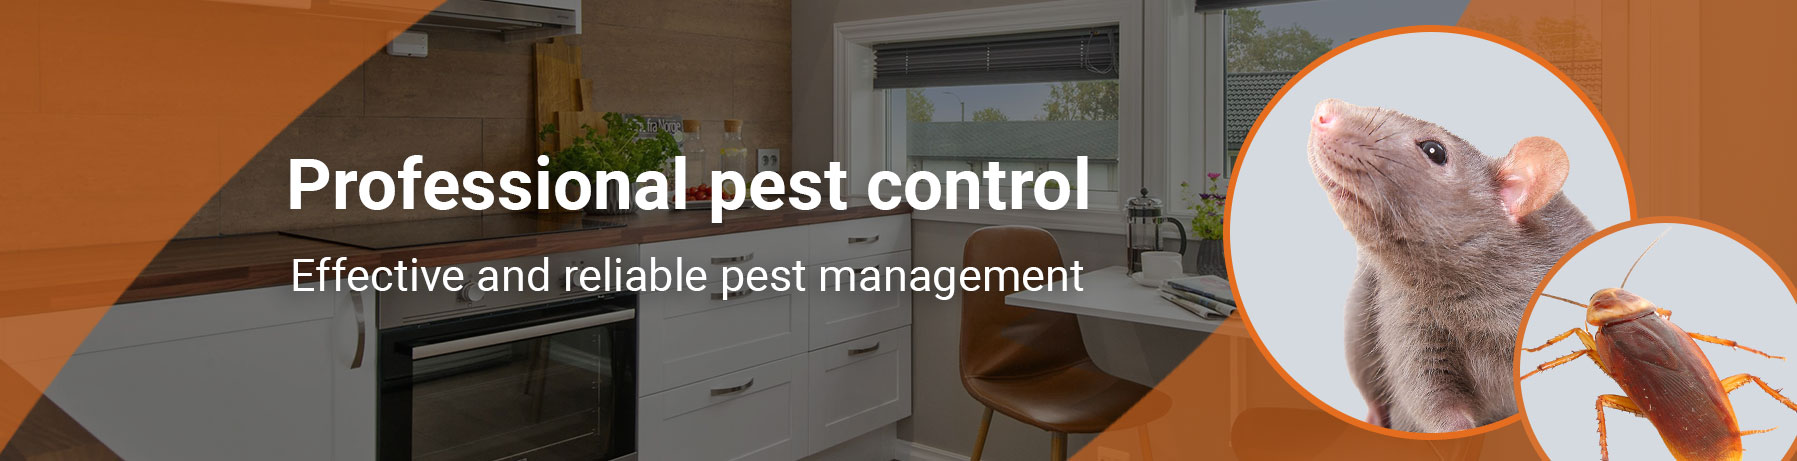 Professional pest control Sydney. Effective and reliable pest management